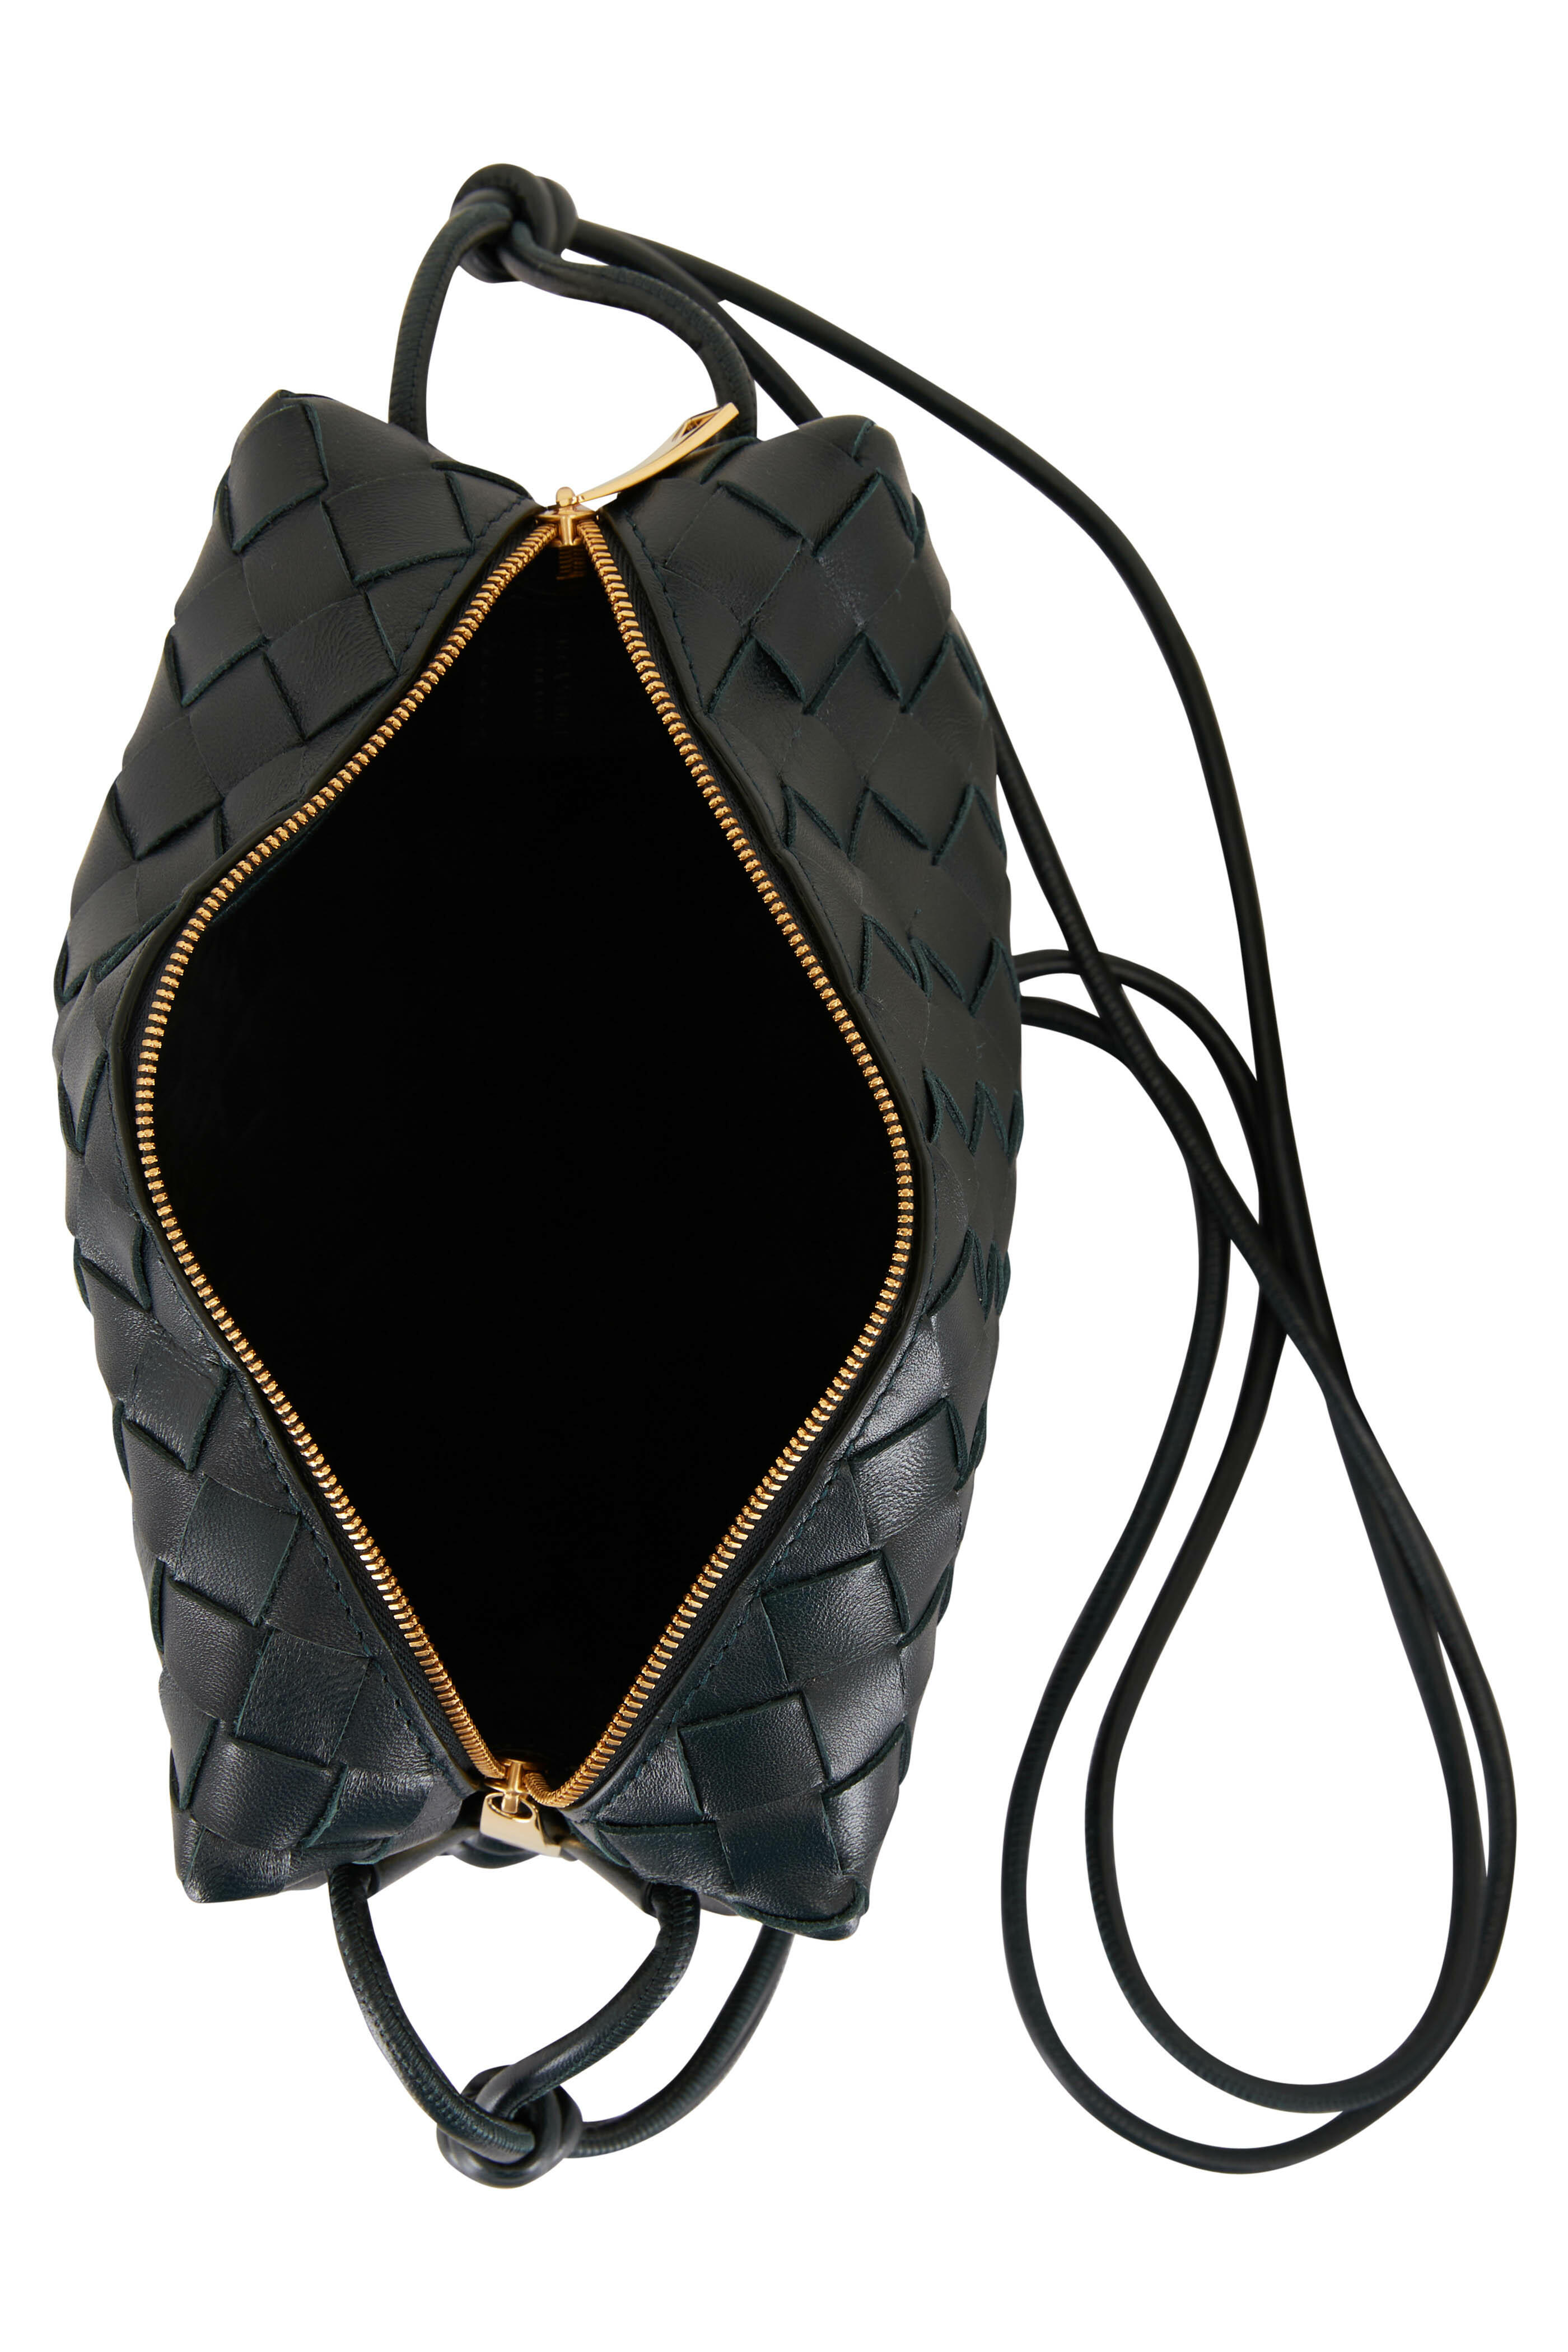 Bottega Veneta Mini Loop Bag 1 Year Review, Wear & Tear, What Fits